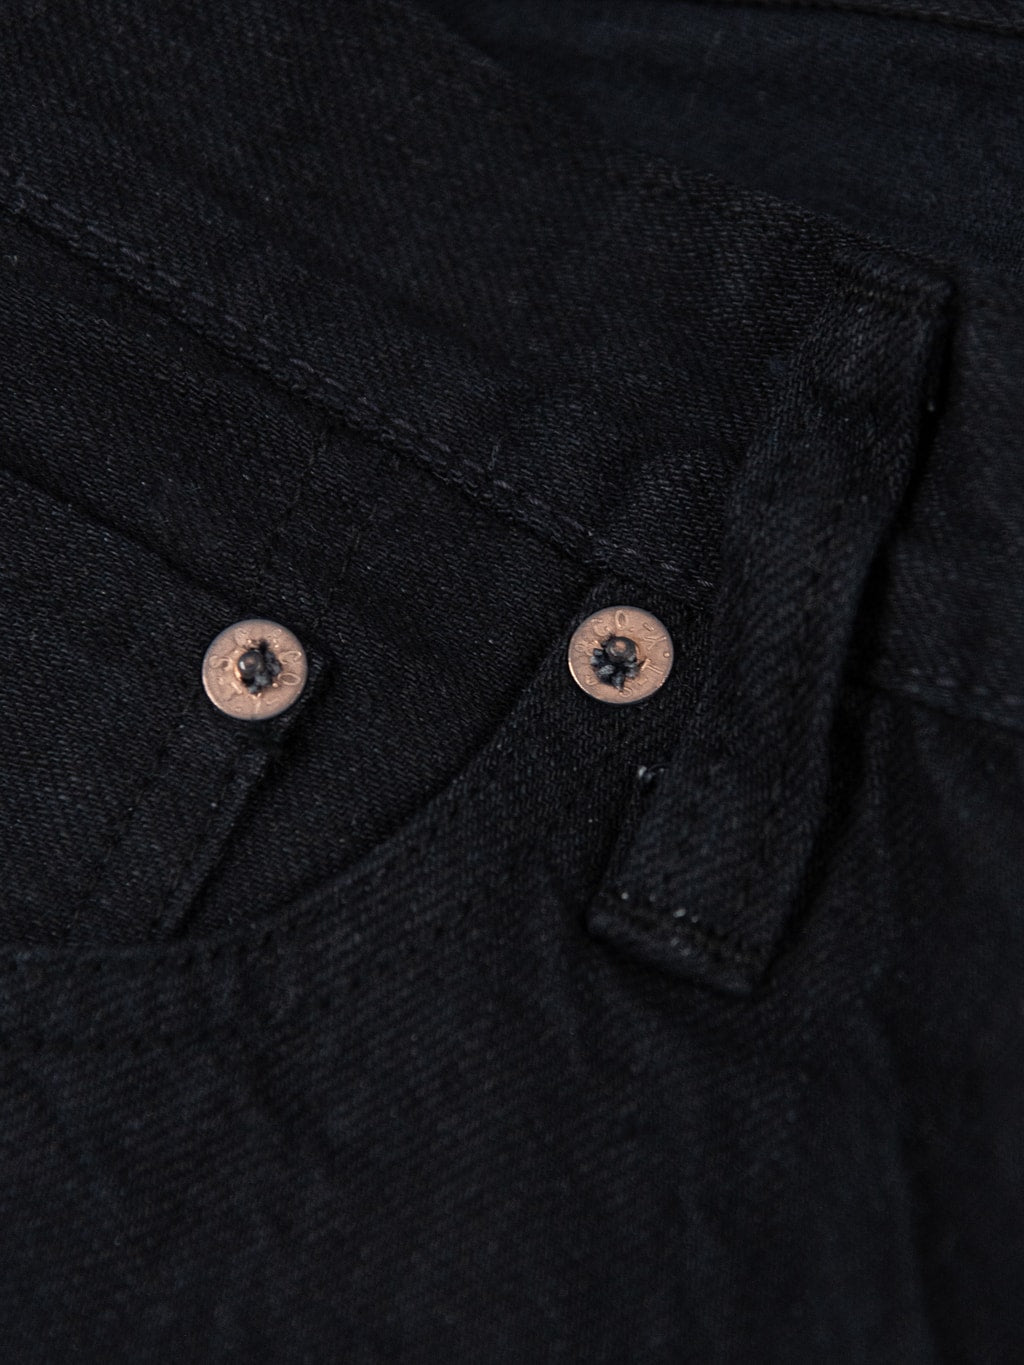 Sugar Cane Type III 13oz Black Denim Slim Jeans rivet closeup